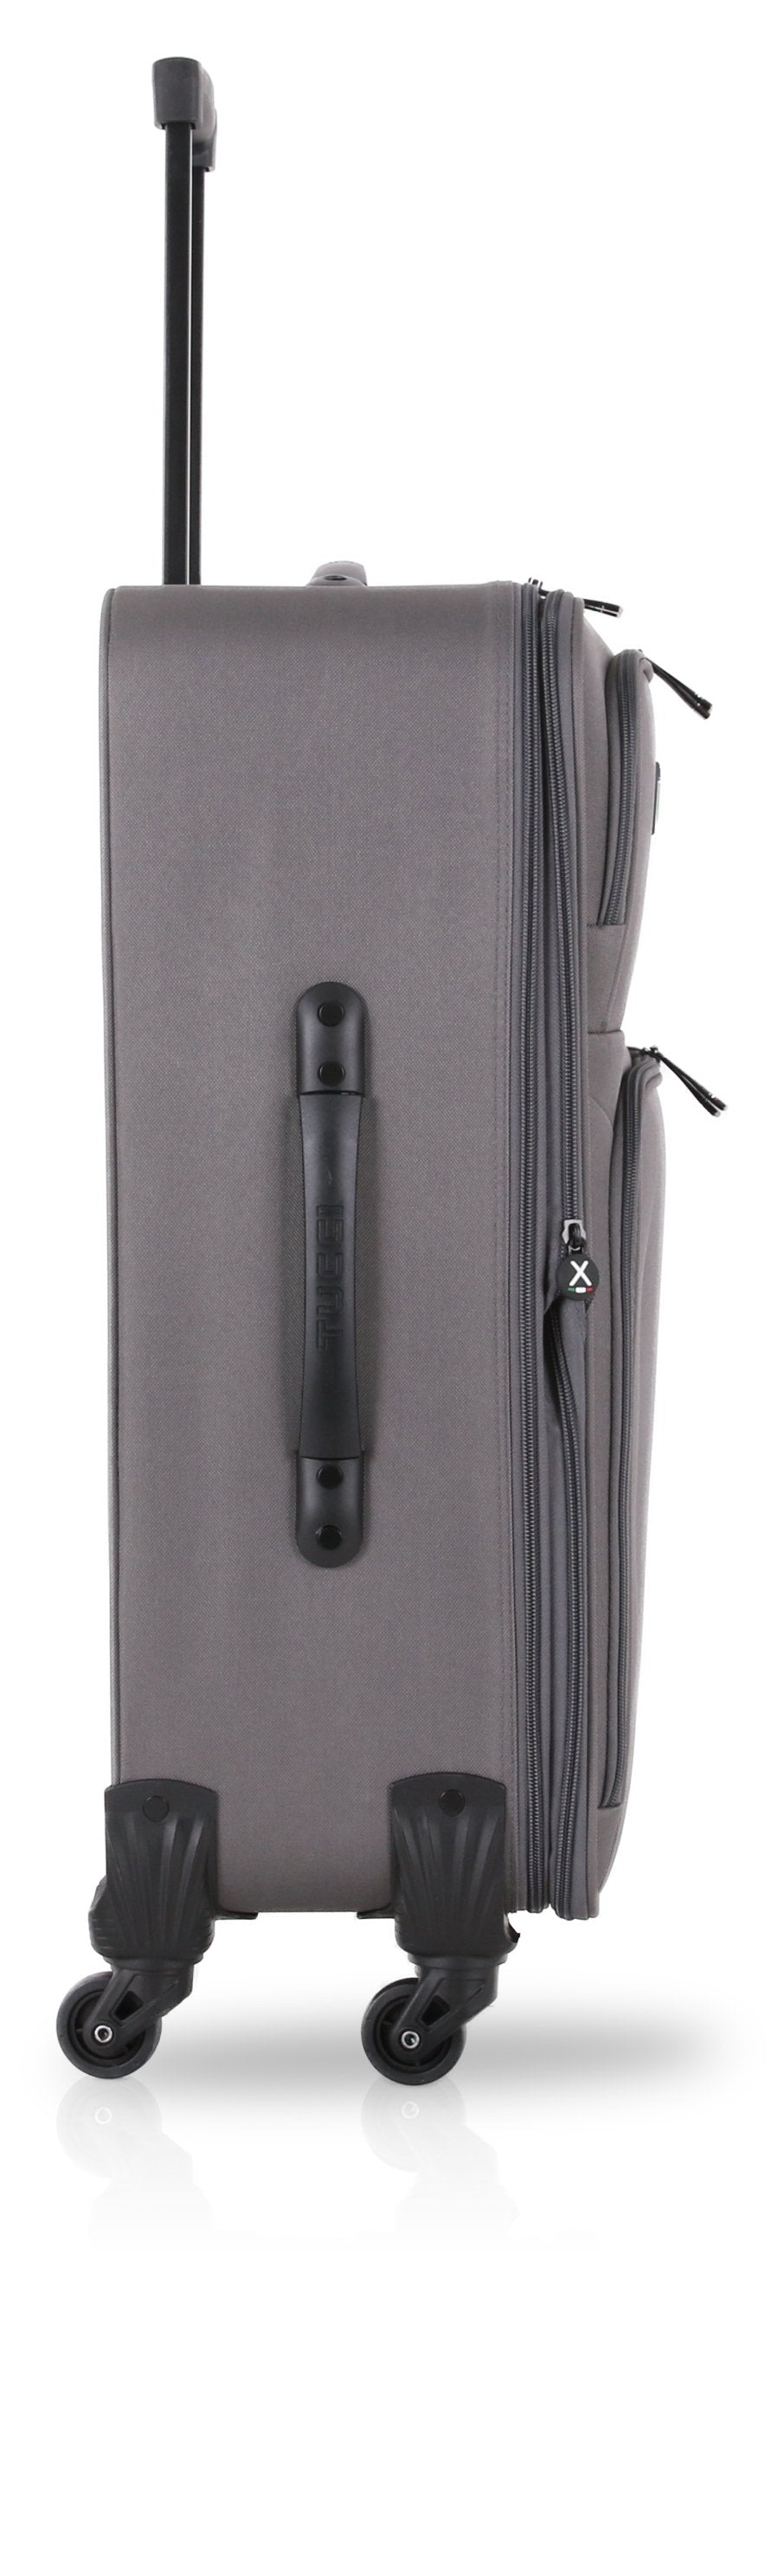 TUCCI Italy DISINVOLTA Fabric 3 PC (20", 24", 28") Luggage Suitcase Set